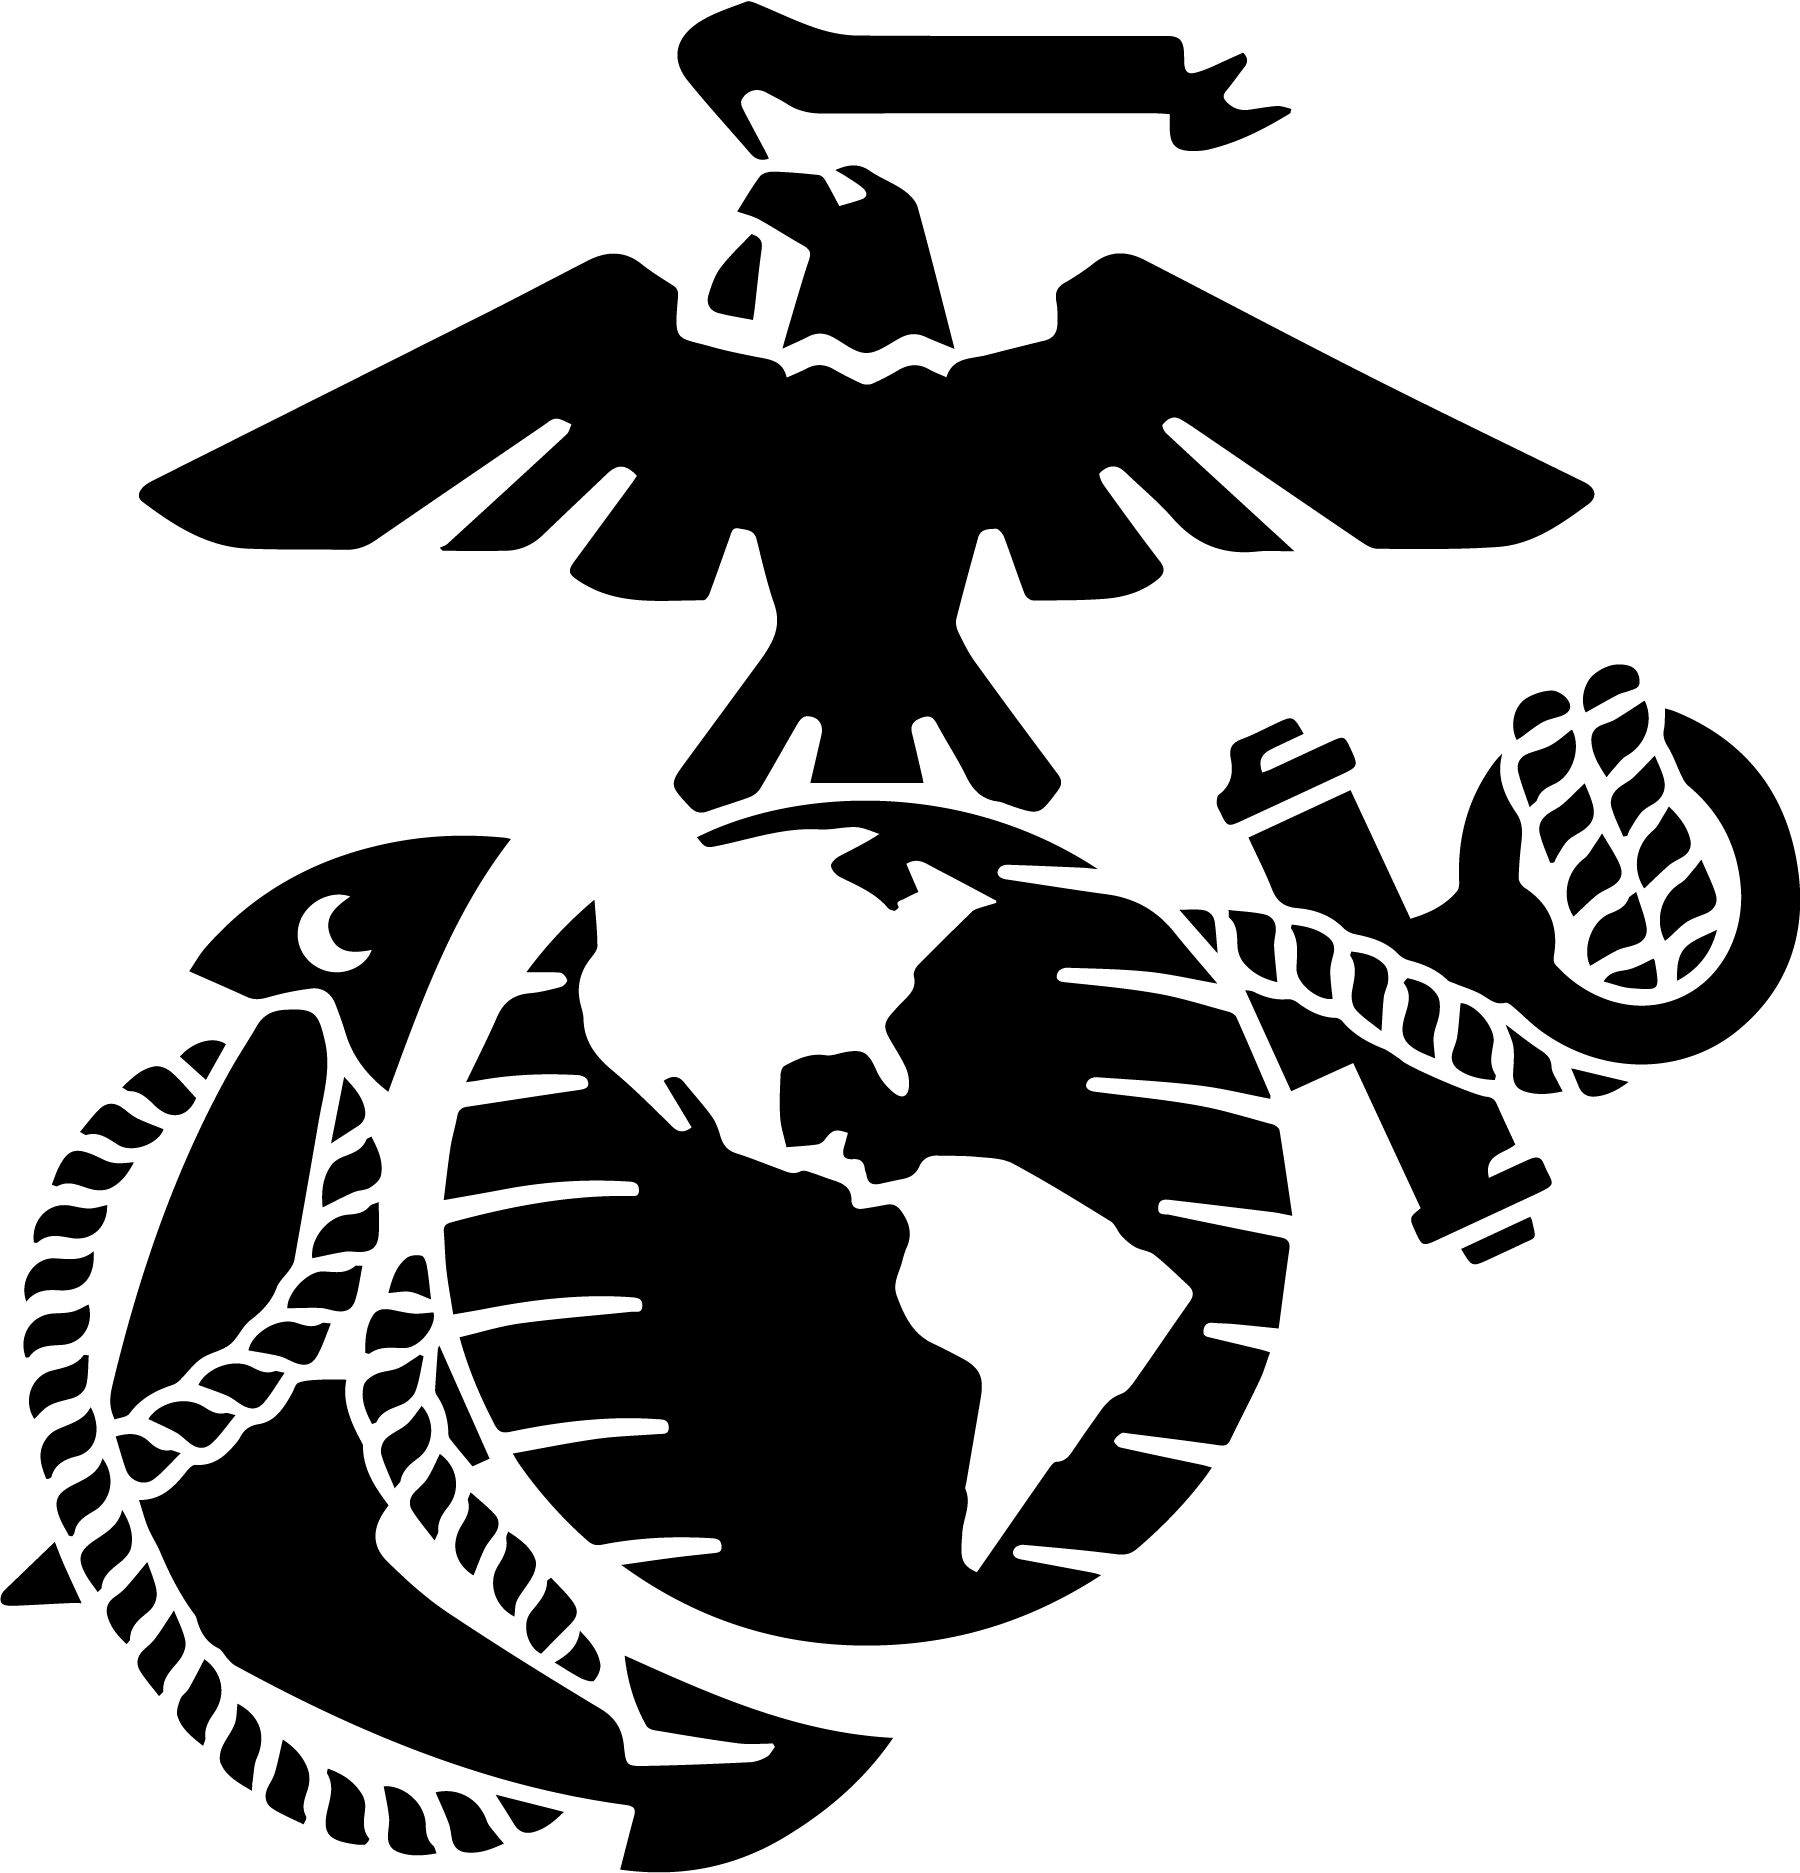 United States Marines Logo - Military Logos Vector - Army, Navy, Air Force, Marines, Coast Guard